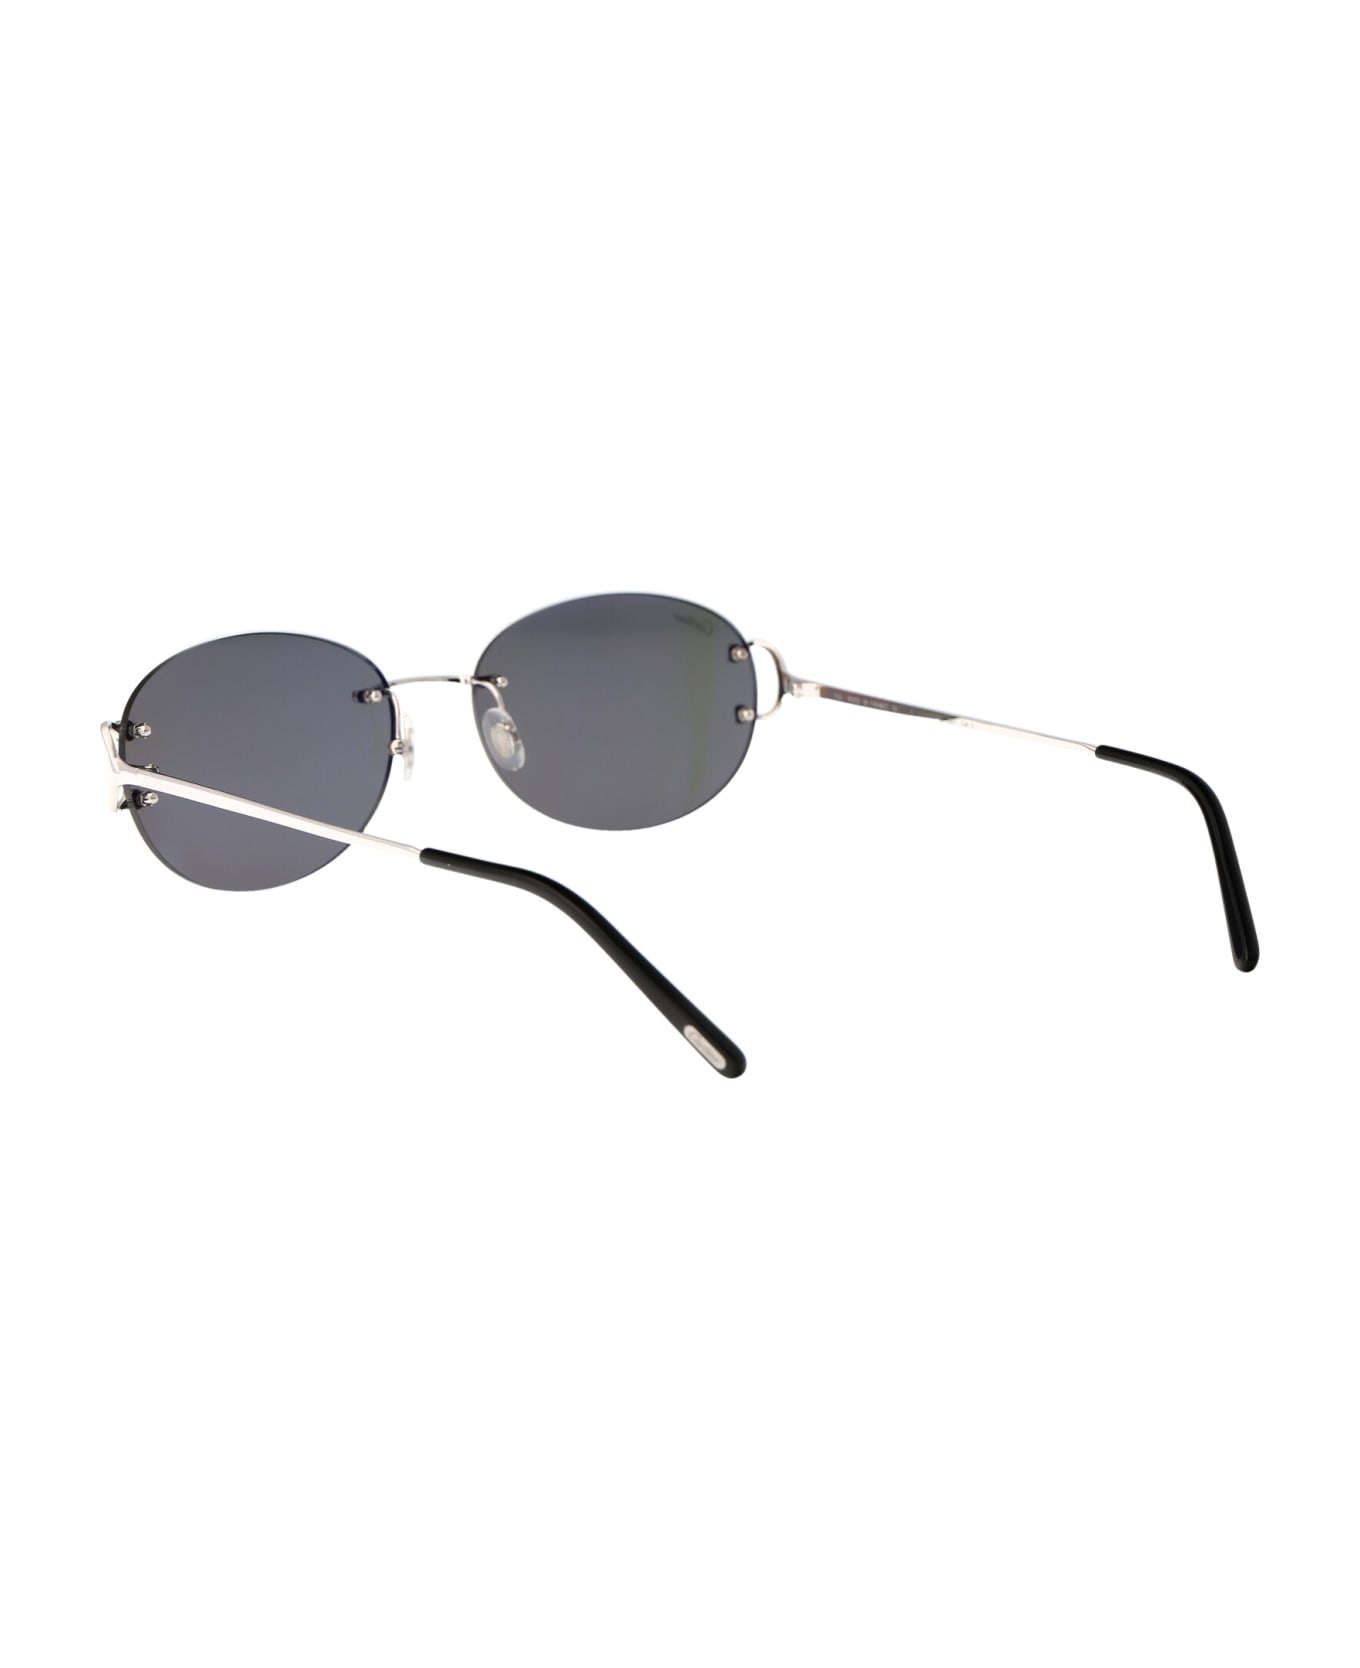 Cartier Eyewear Ct0029rs Sunglasses - 001 SILVER SILVER GREY